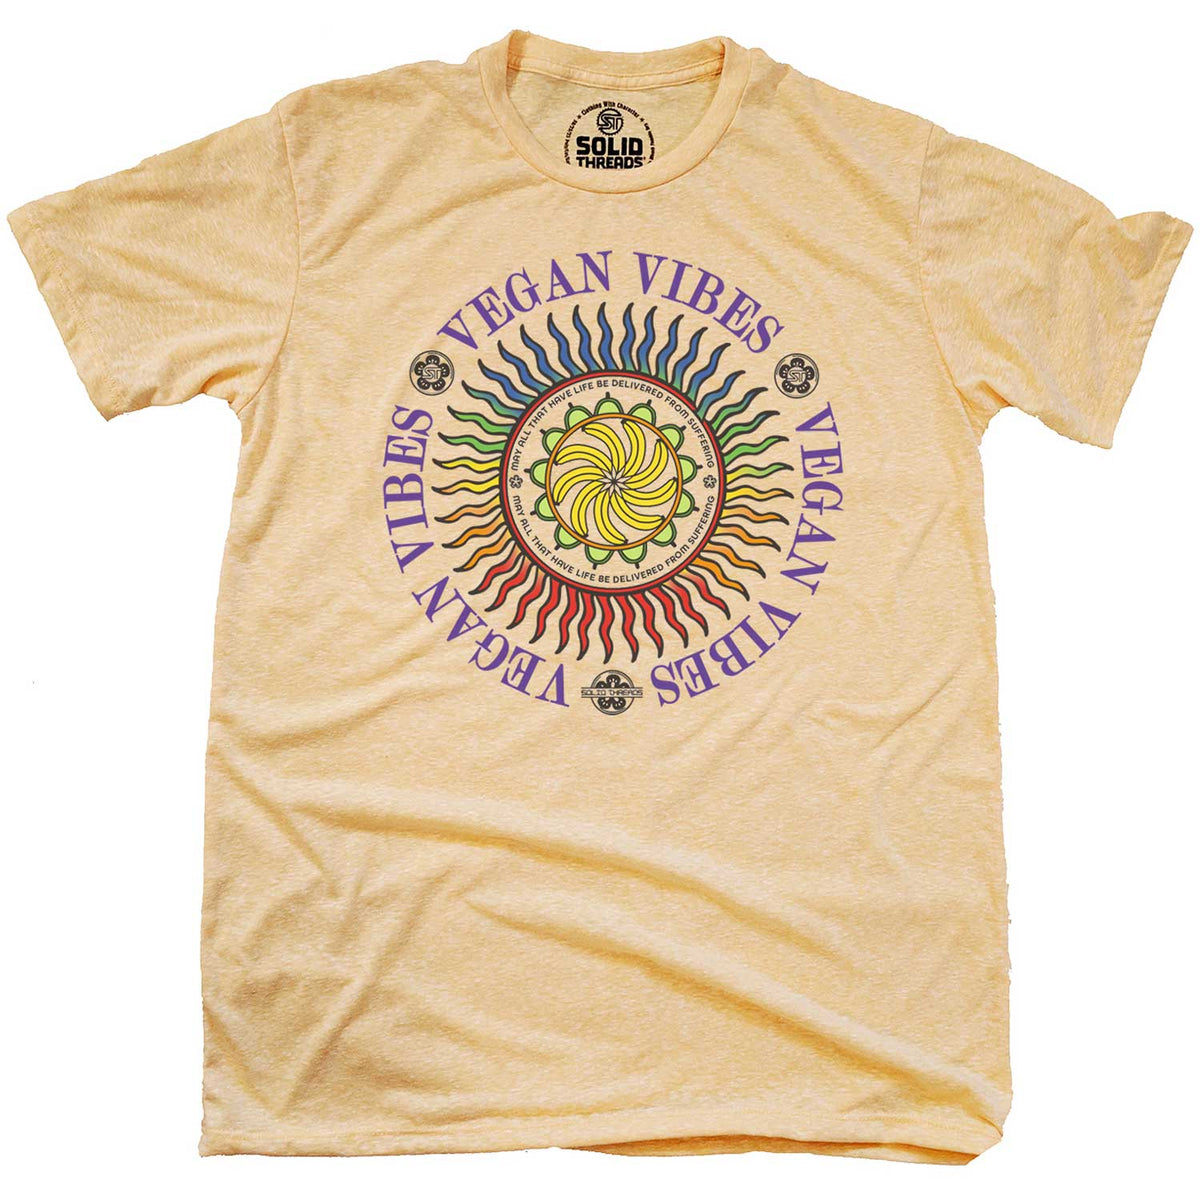 Men&#39;s Vegan Vibes Cool Vegetarian Graphic T-Shirt | Vintage Hippie Tee | Solid Threads